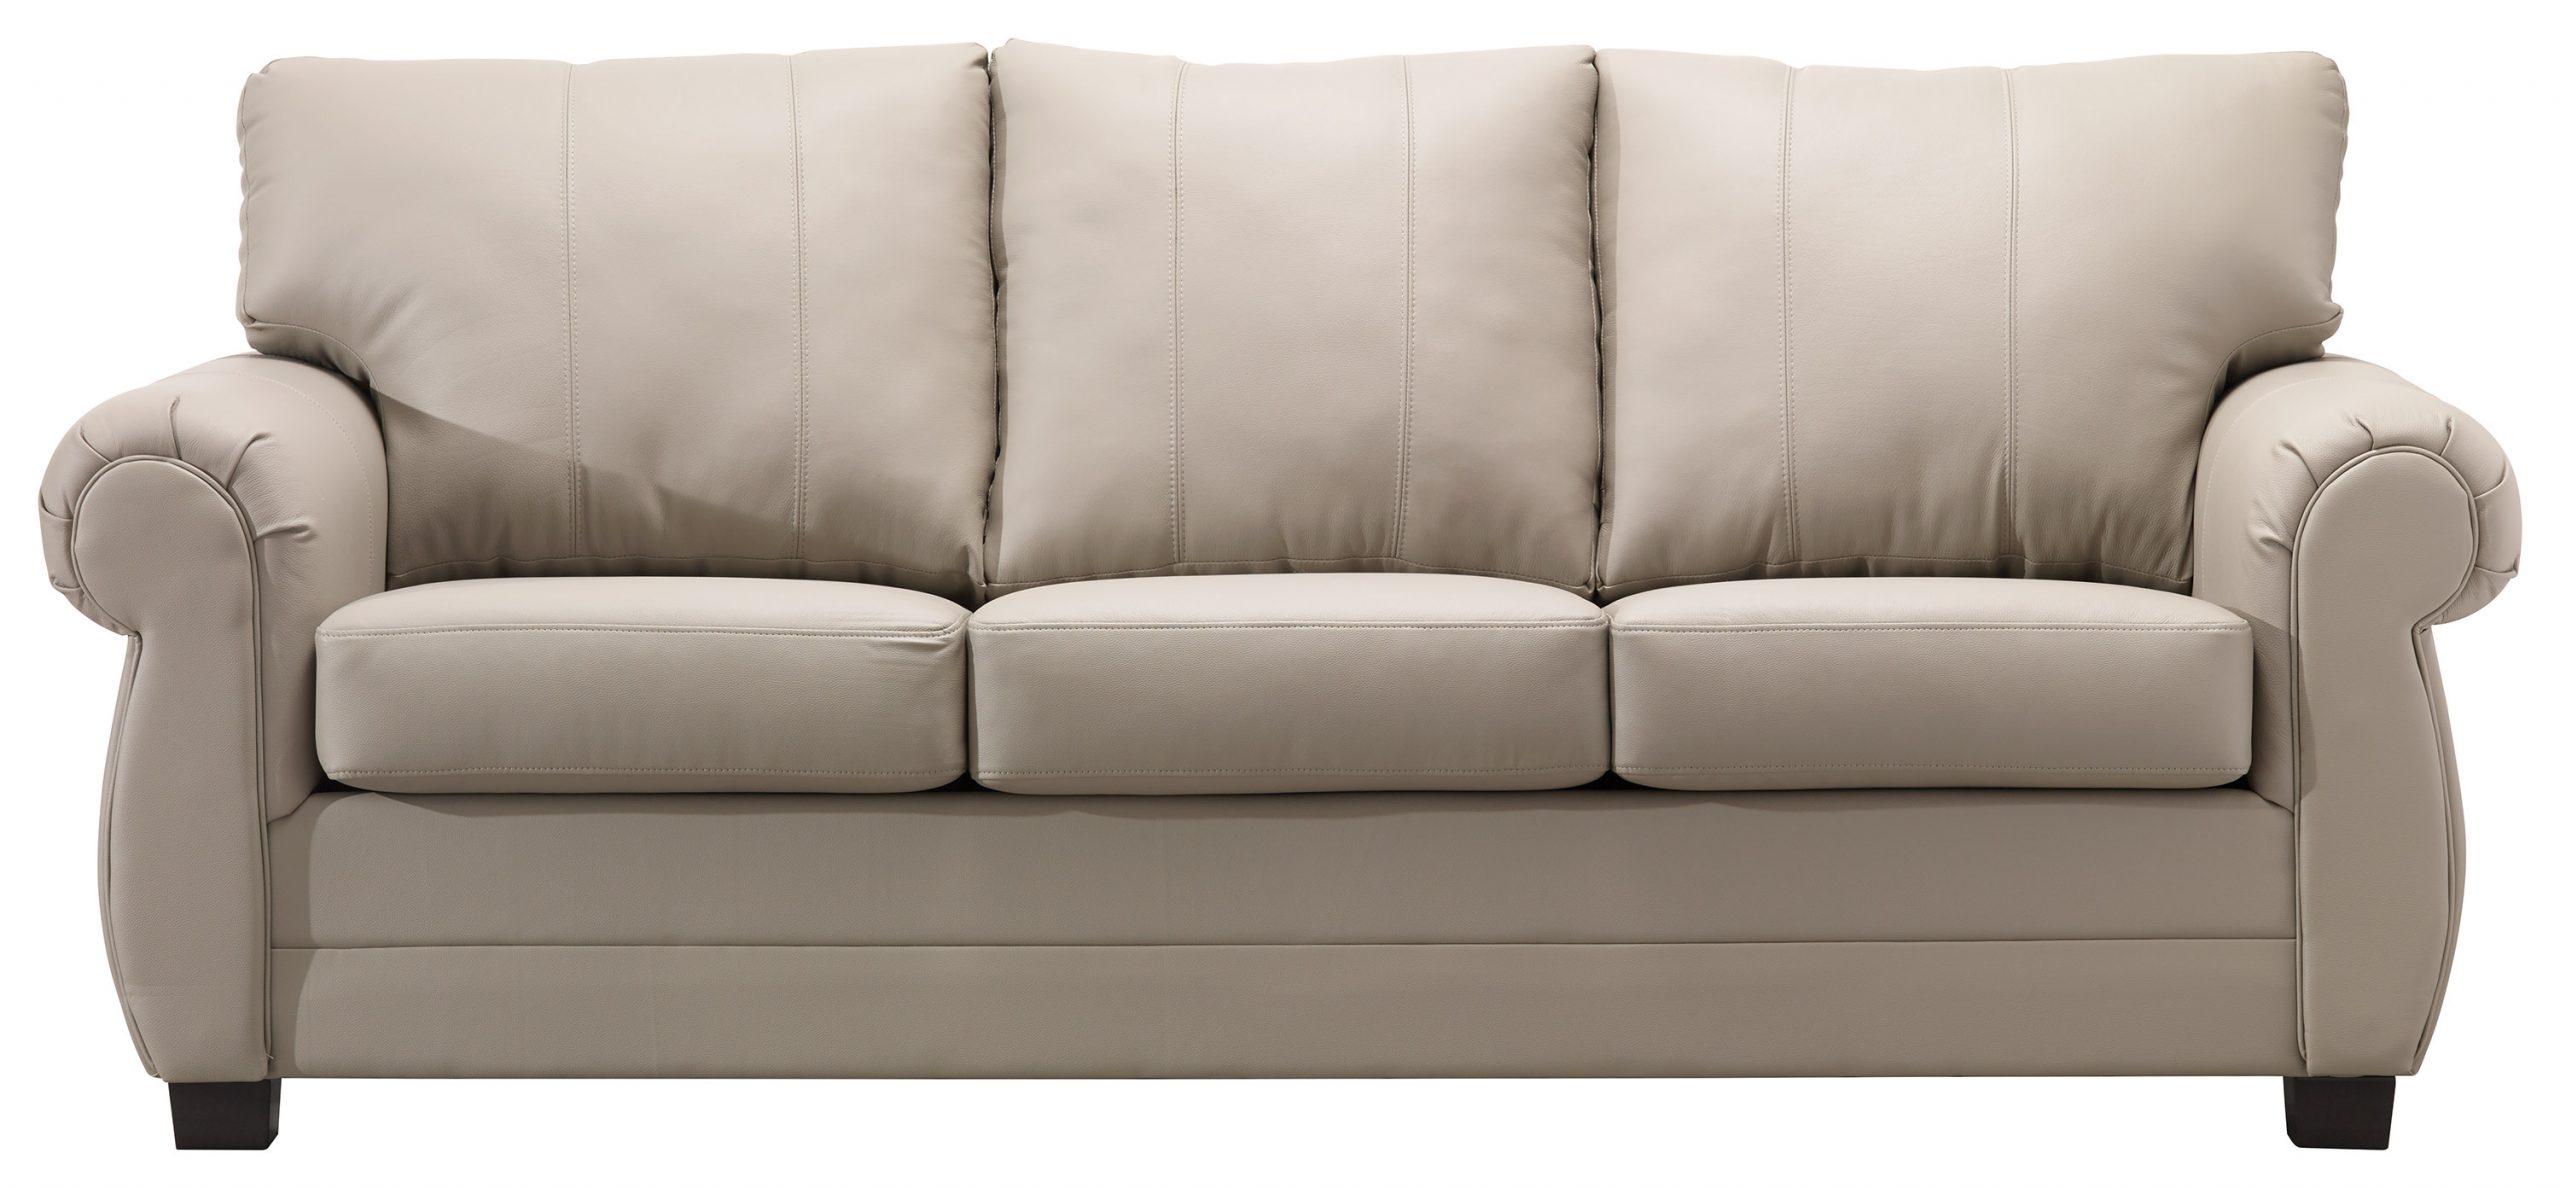 overstock gray leather sofa